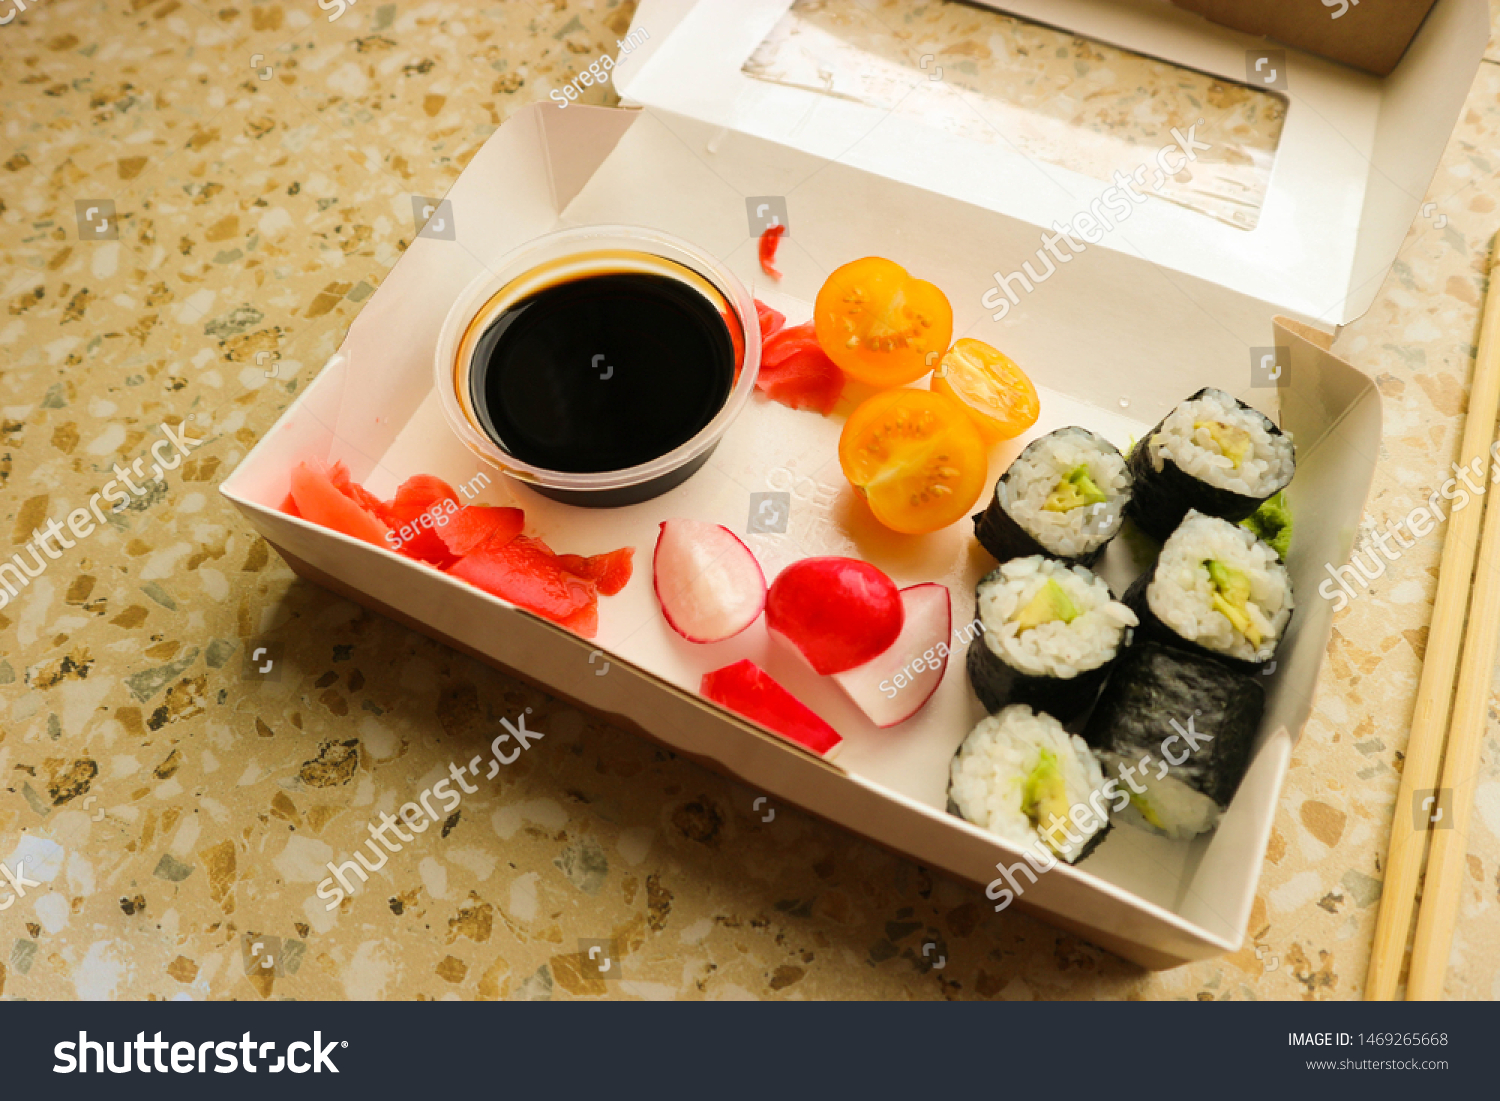 Sushi Chopsticks Paper Box Radish Yellow Food And Drink Stock Image 1469265668